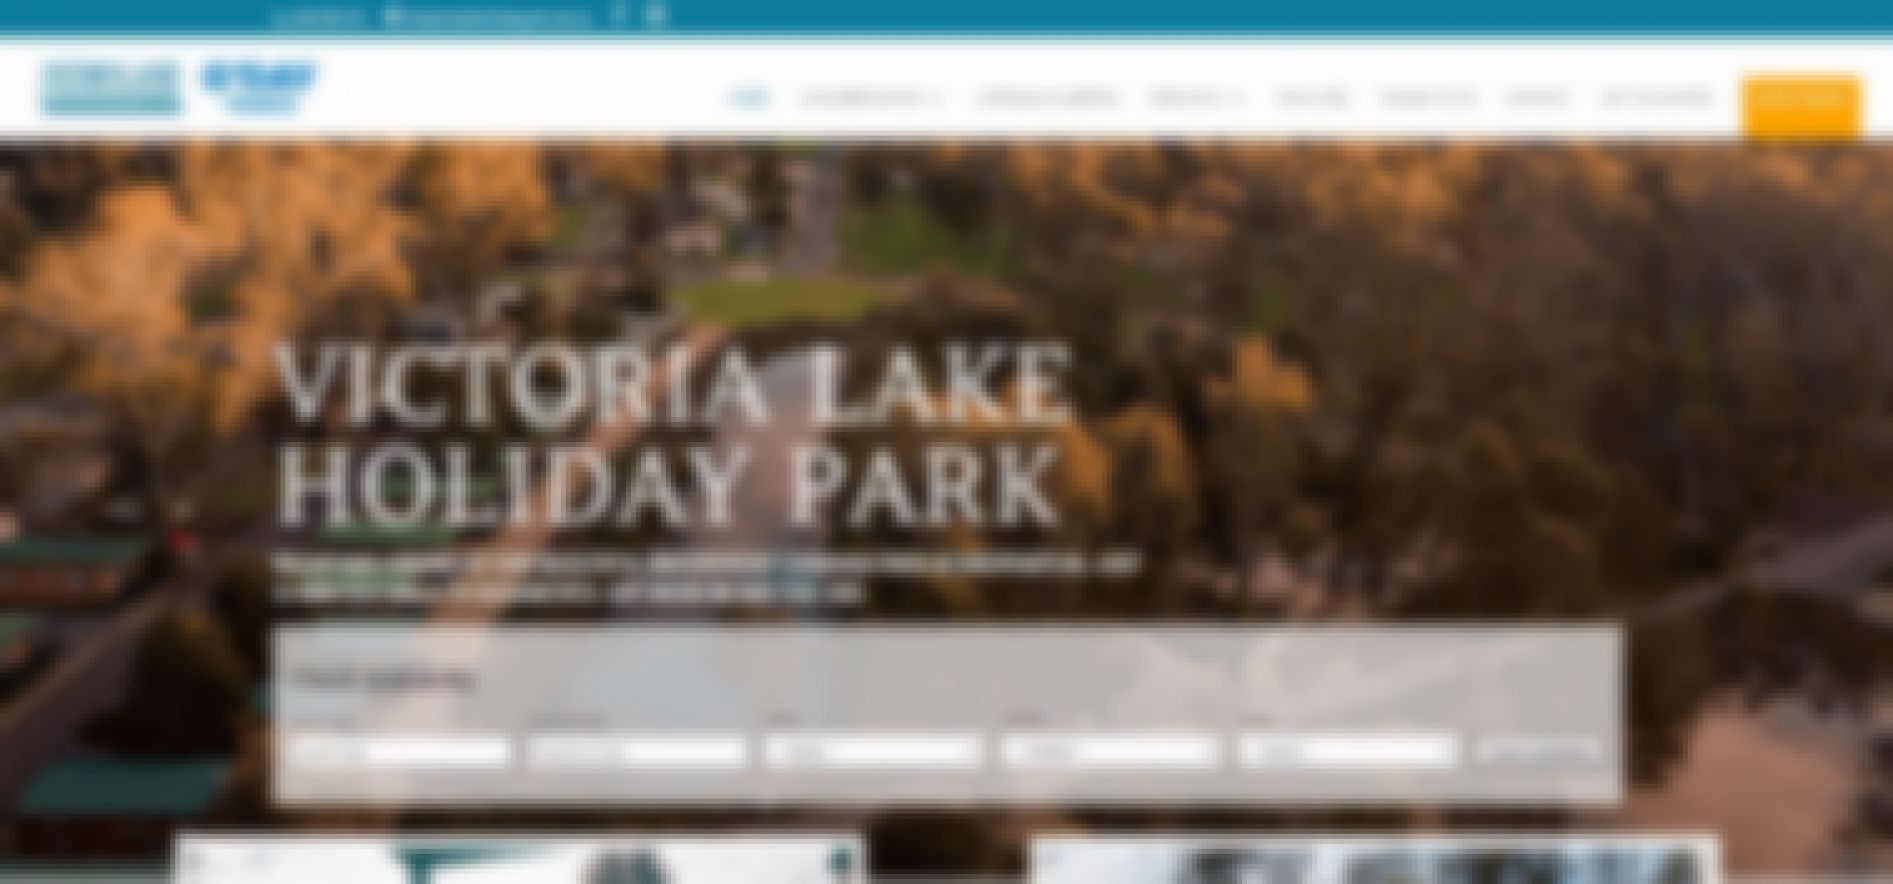 victoria lake holiday park